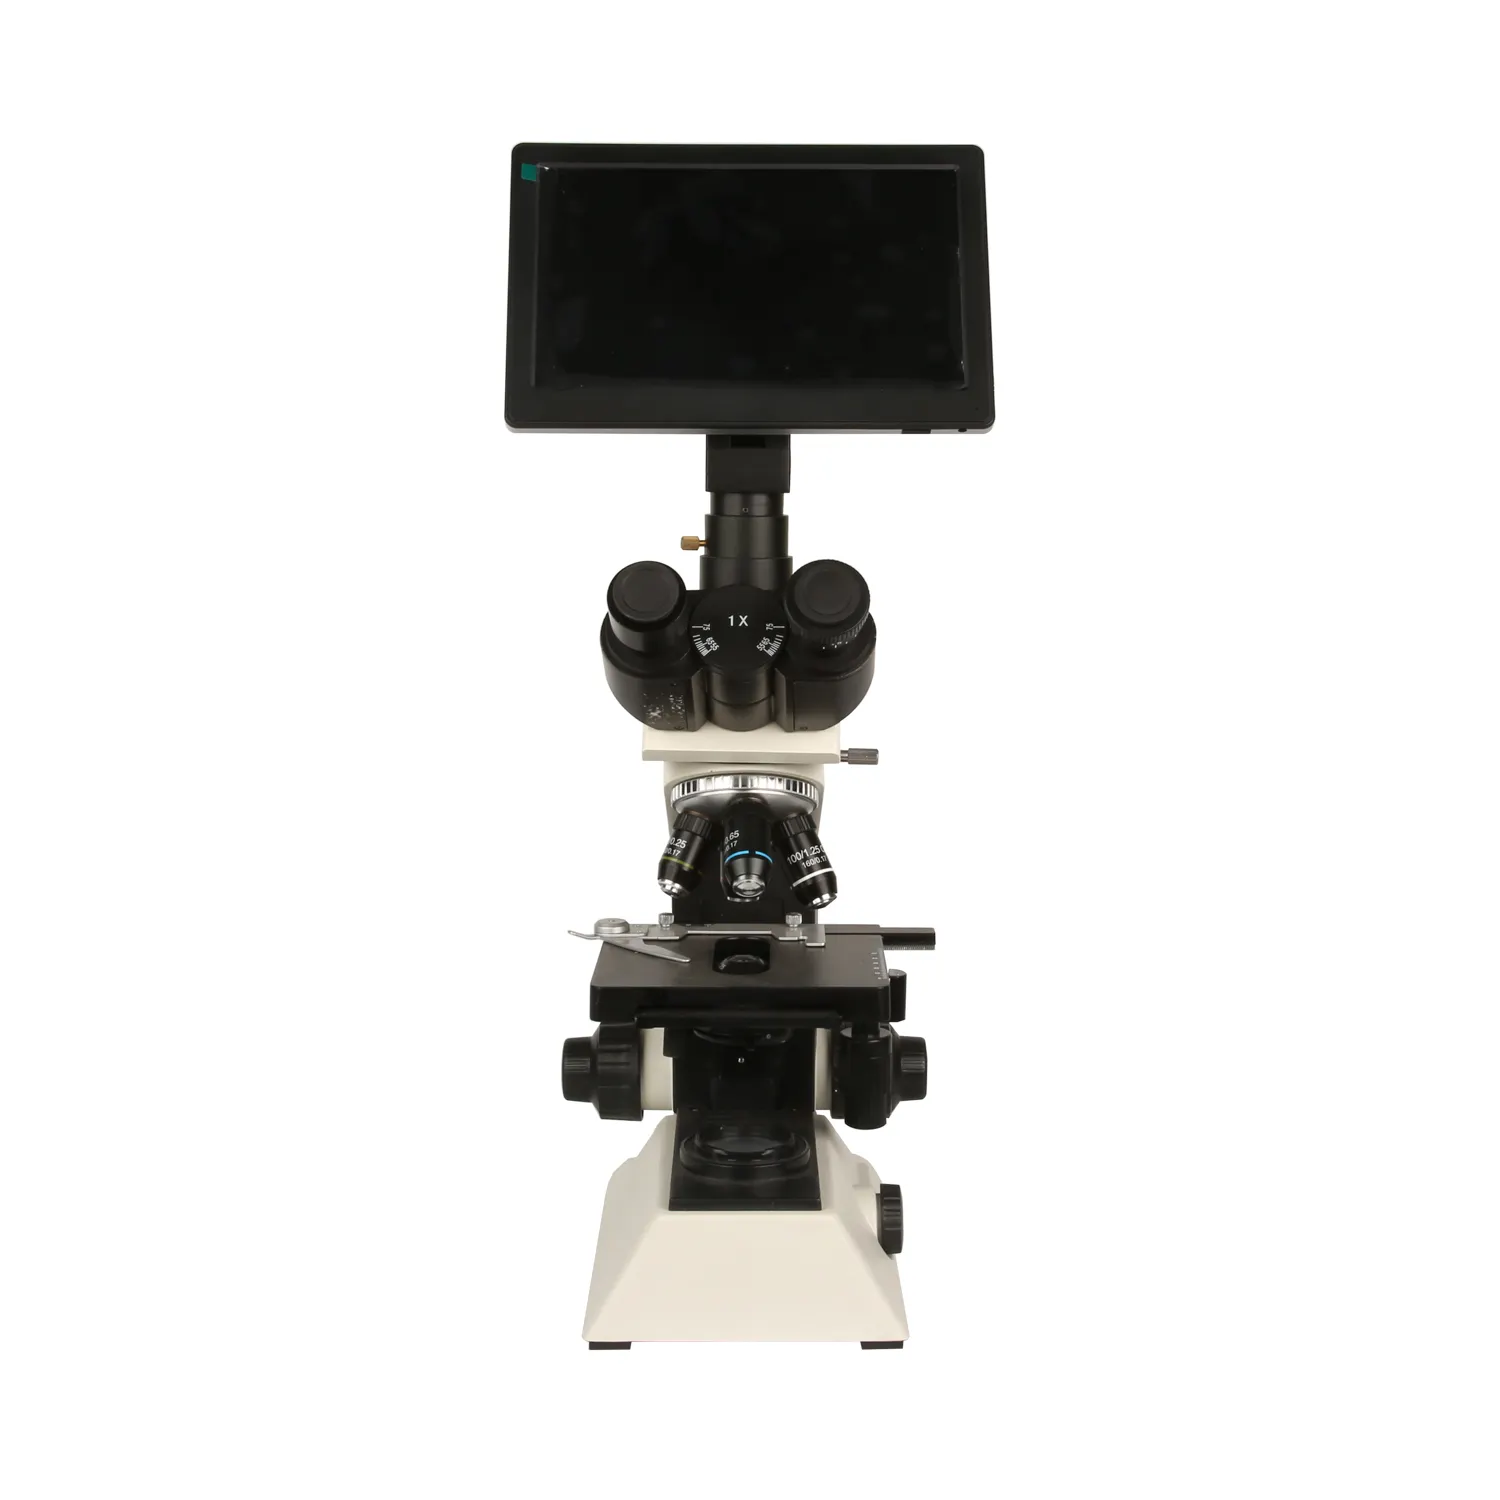 Ysenmed mikroskop elektronik YSXWJ-BX-301B, teropong digital 7 inci layar LCD untuk kamera